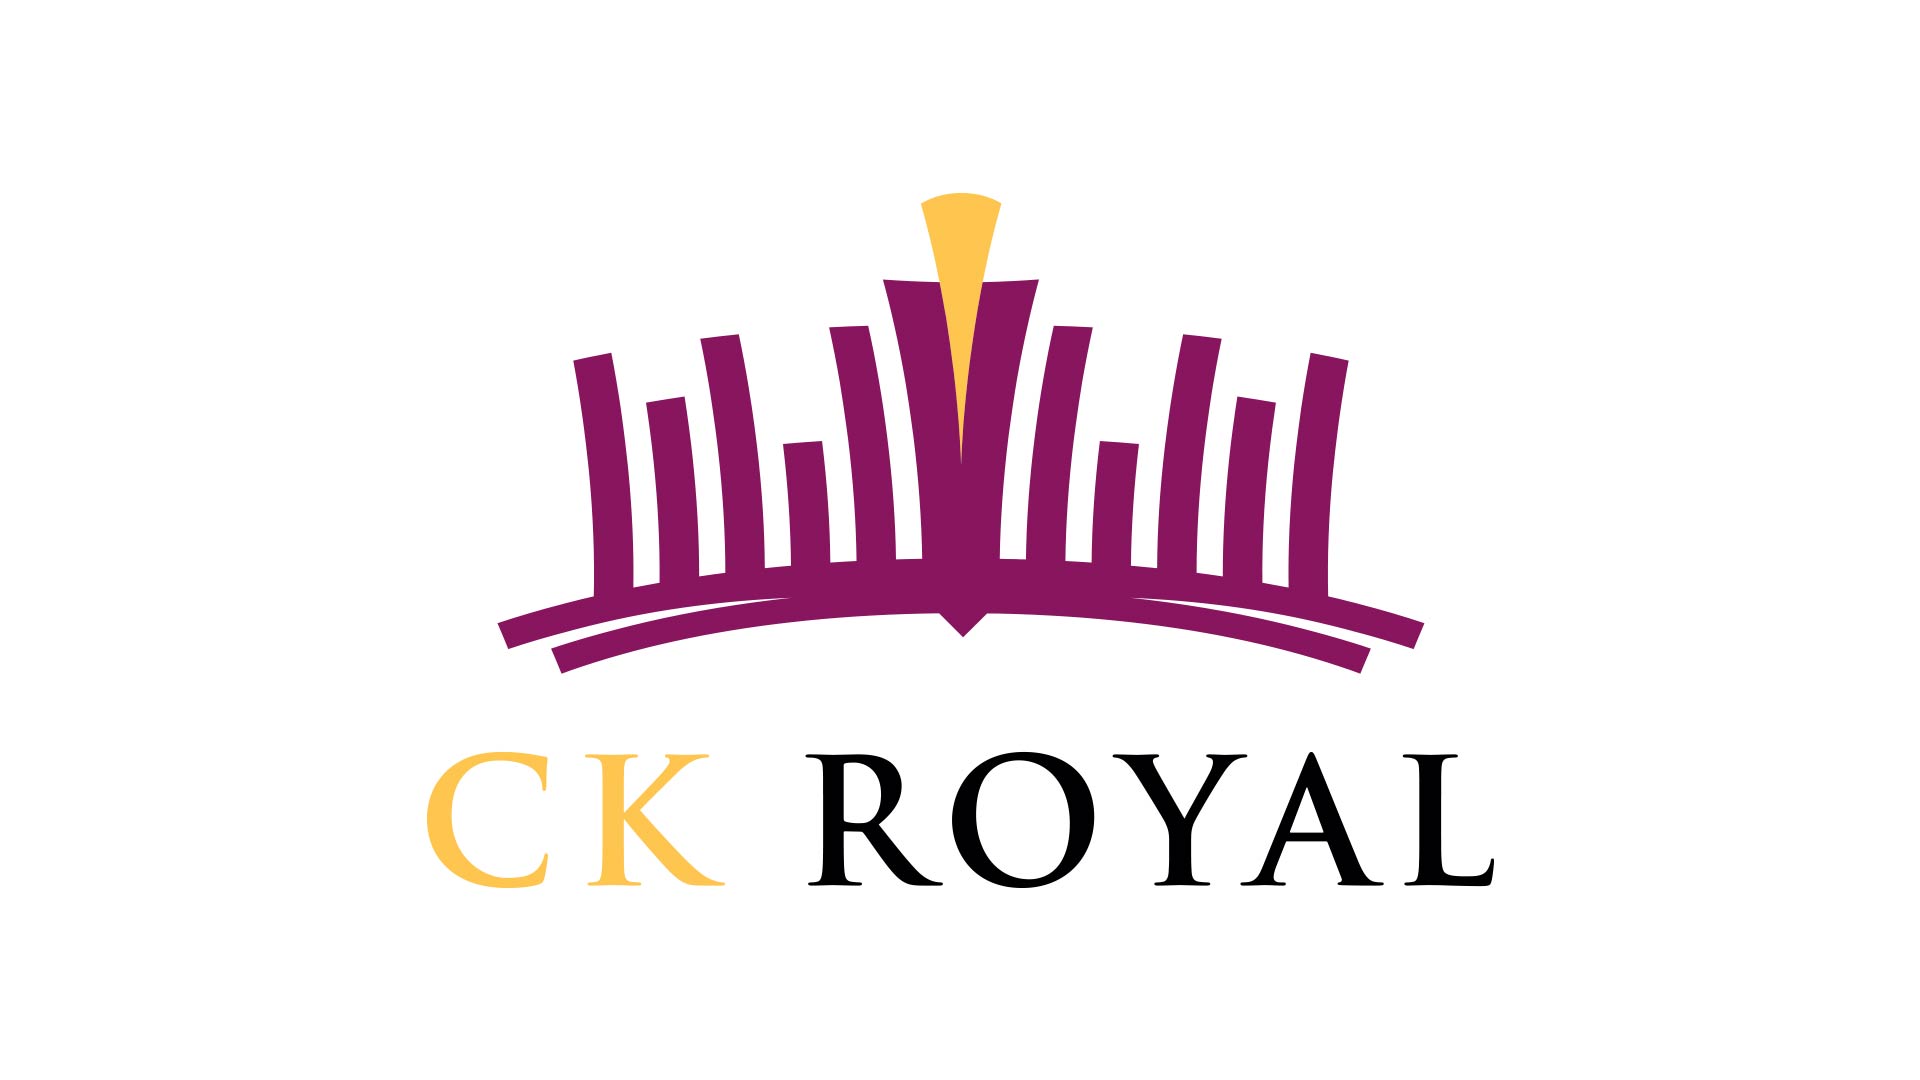 Tvorba loga - logo CK Royal